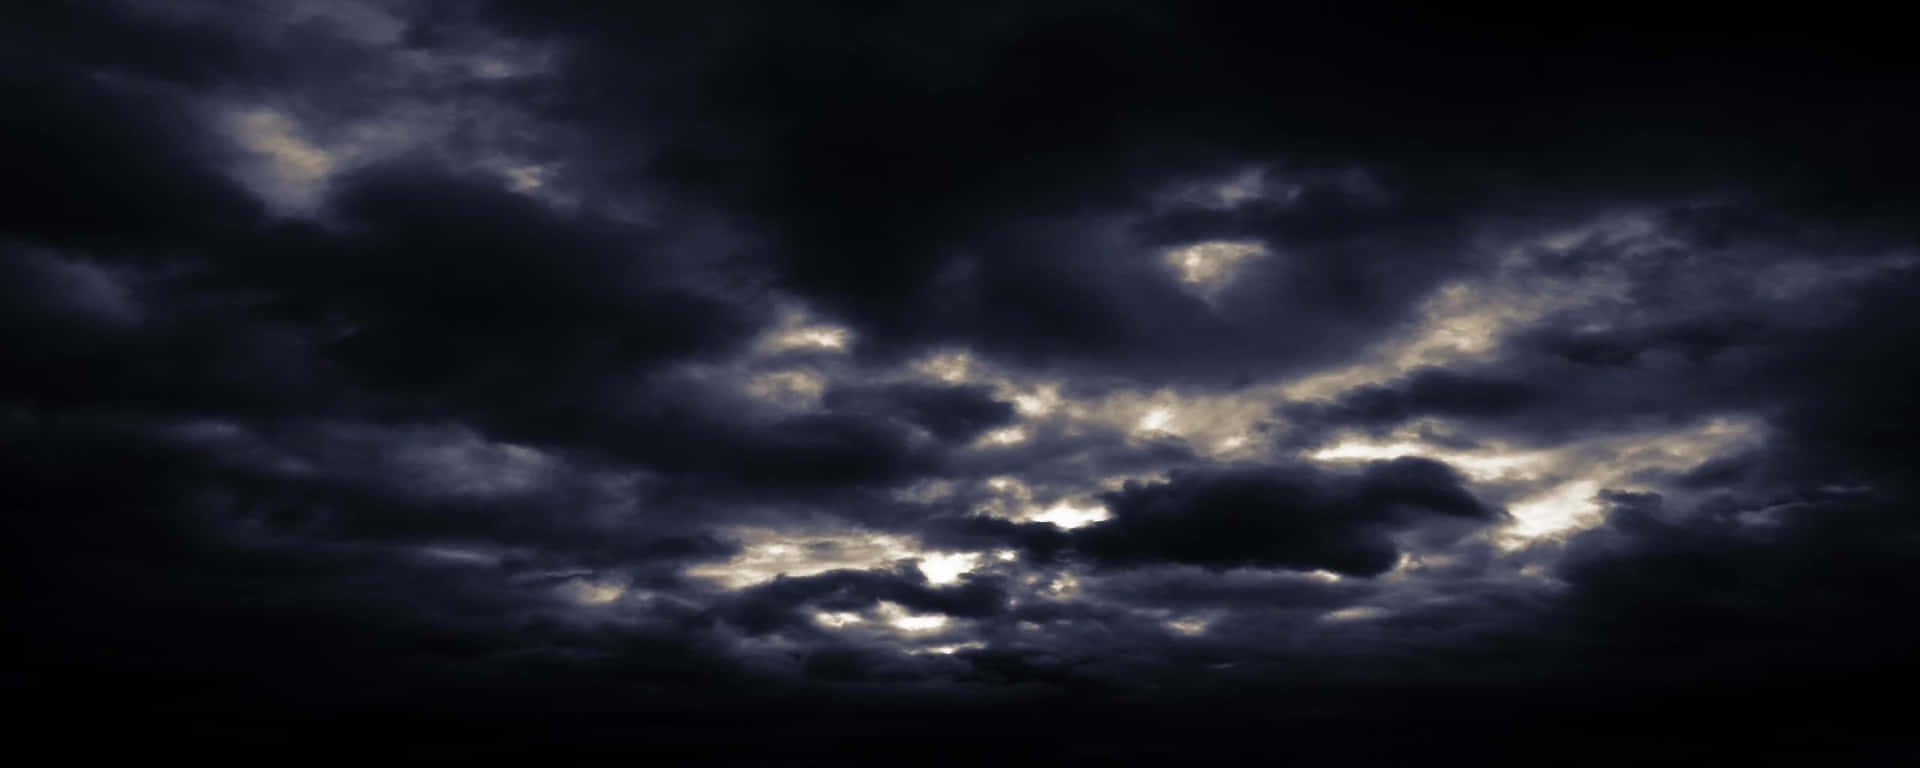 dark night sky clouds